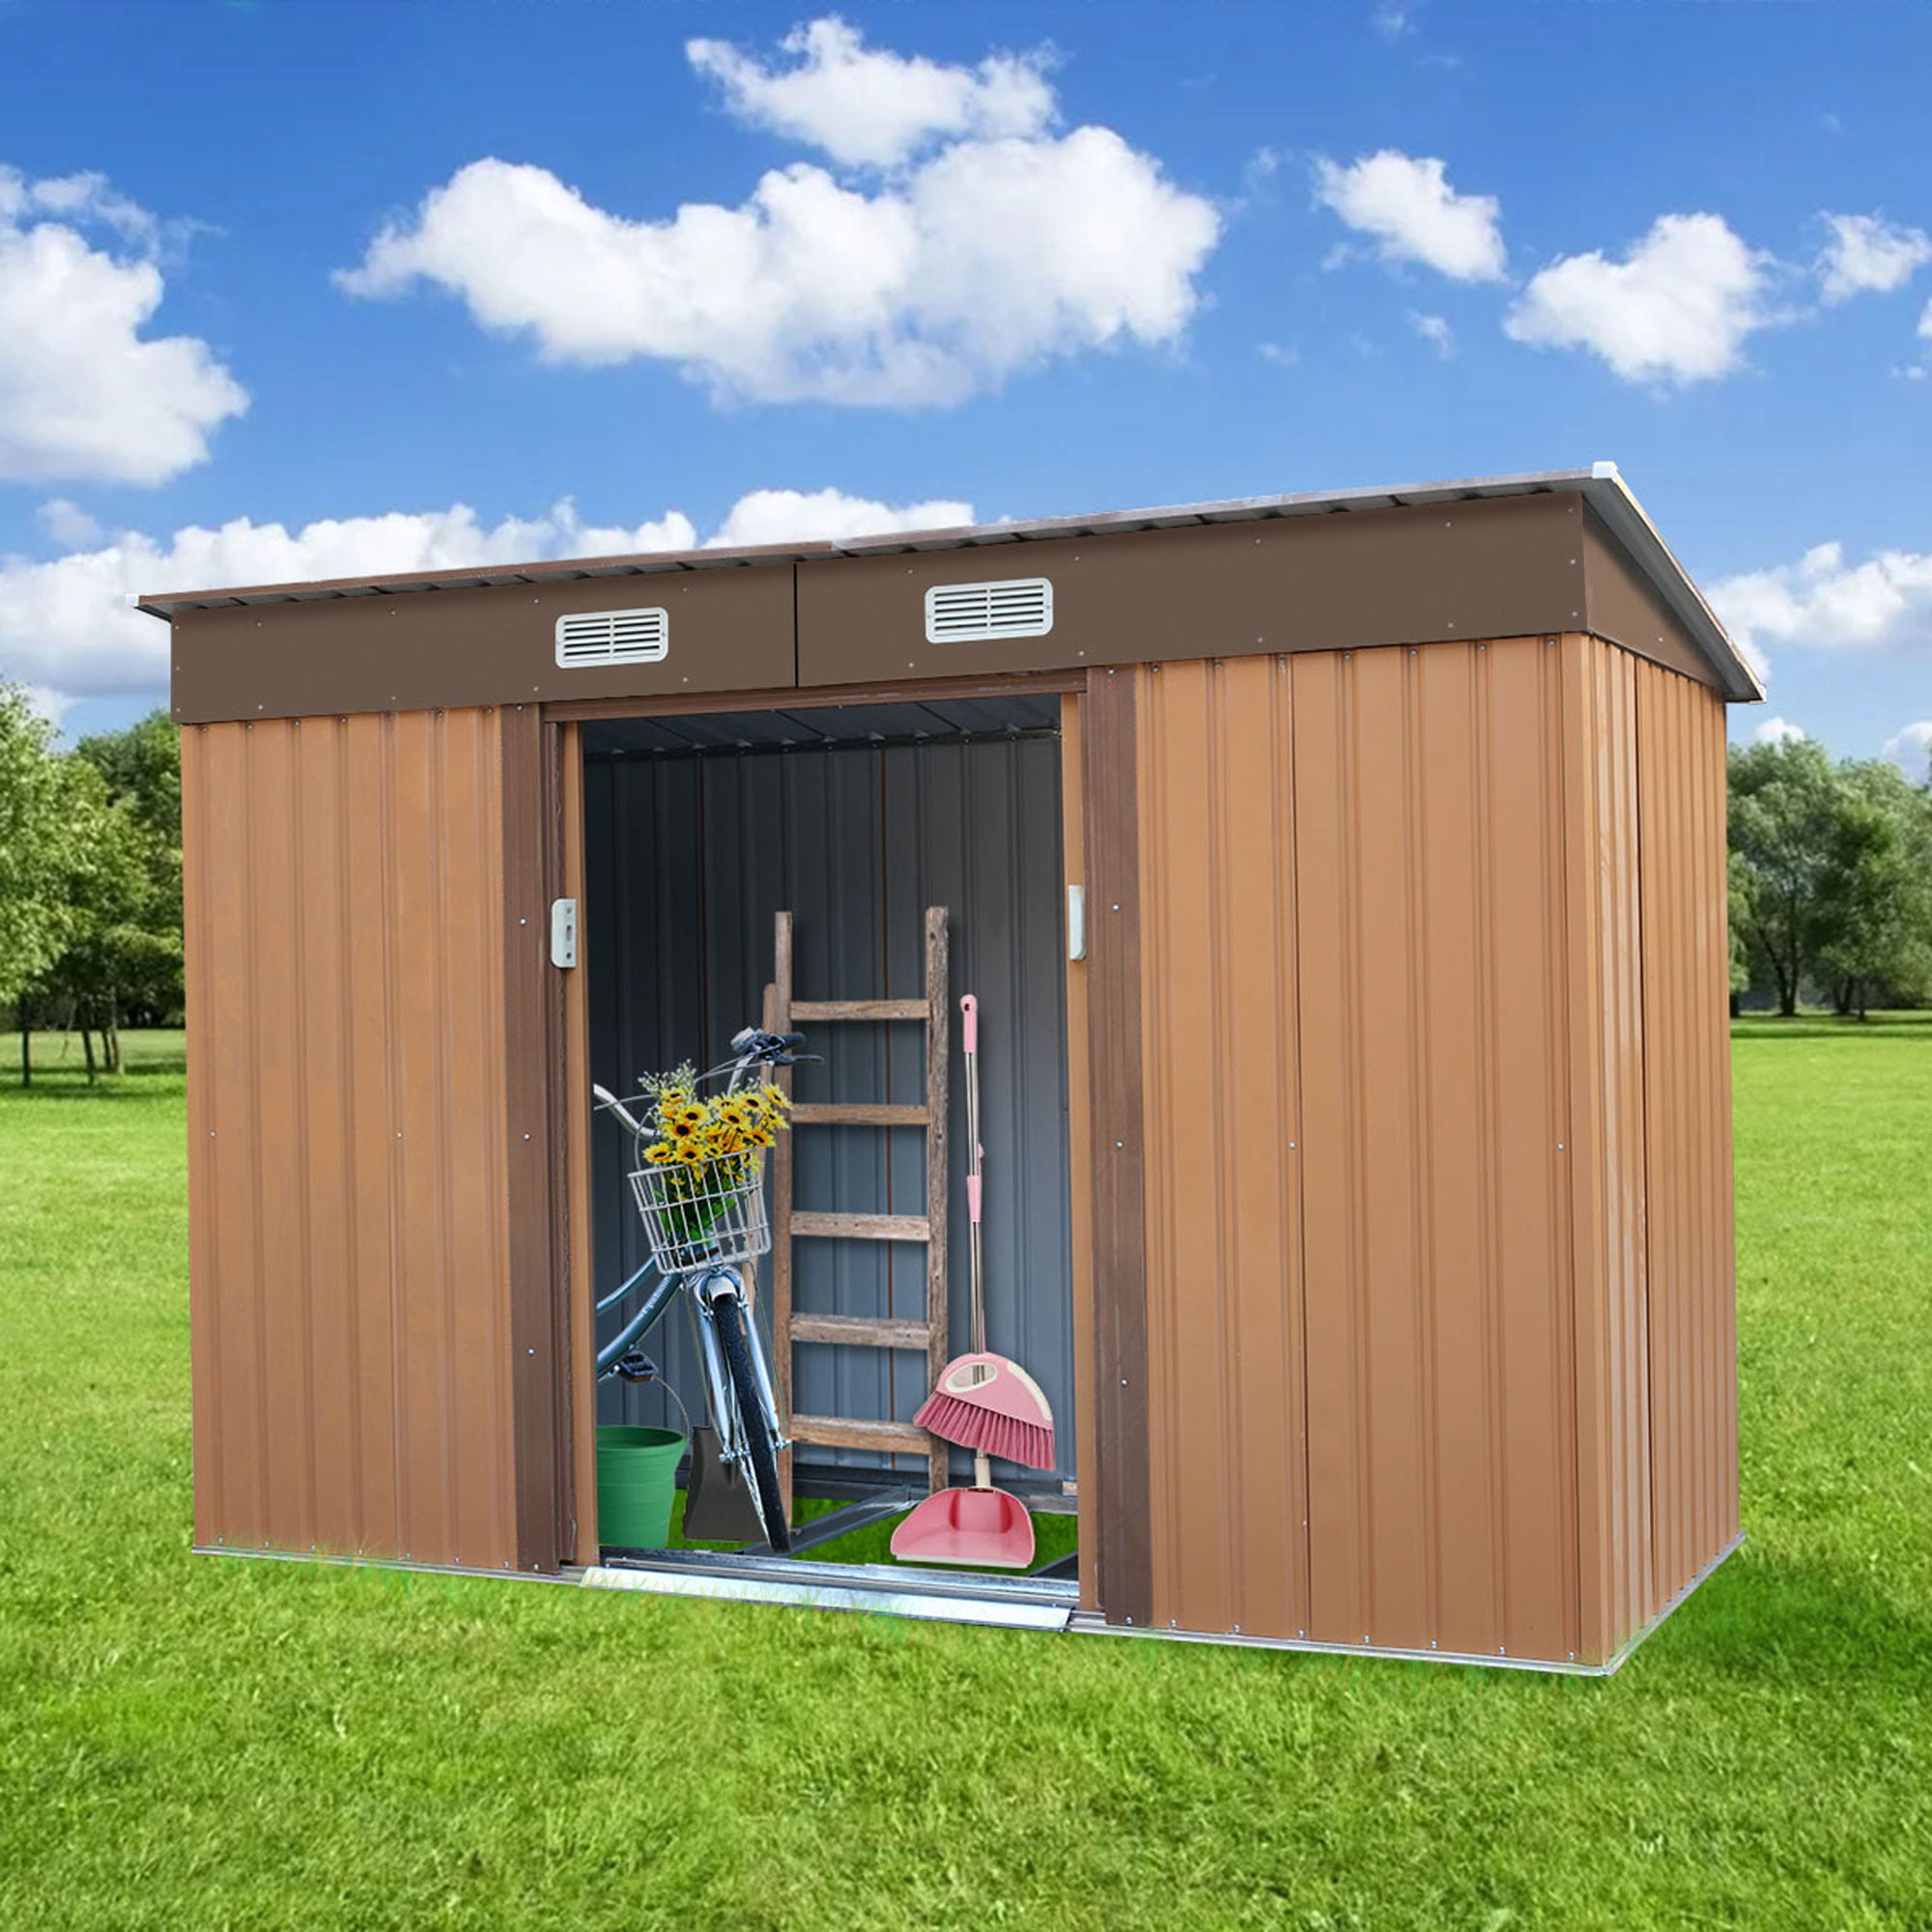 Jaxpety 9' x 4' Outdoor Backyard Garden Metal Storage Shed for Utility ...